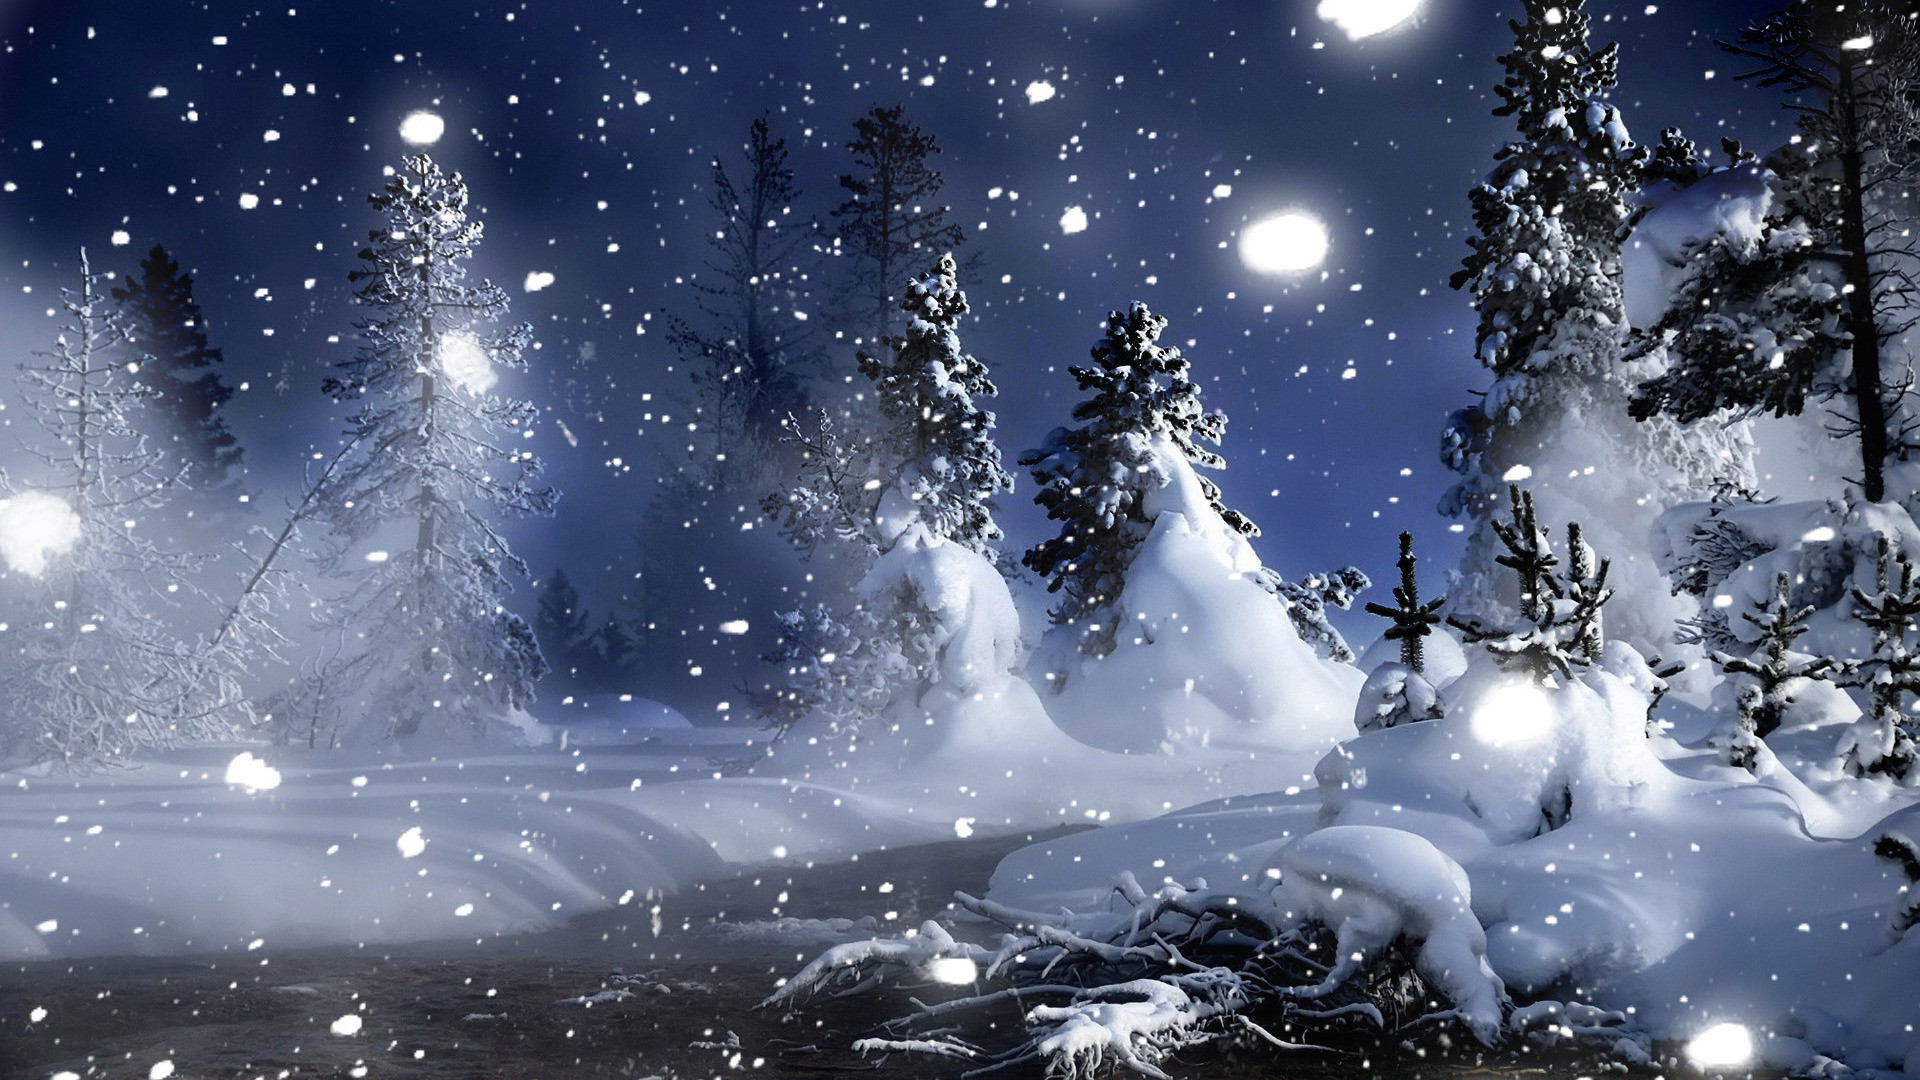 1920x1080 3D Winter Night Snow Desktop Wallpaper